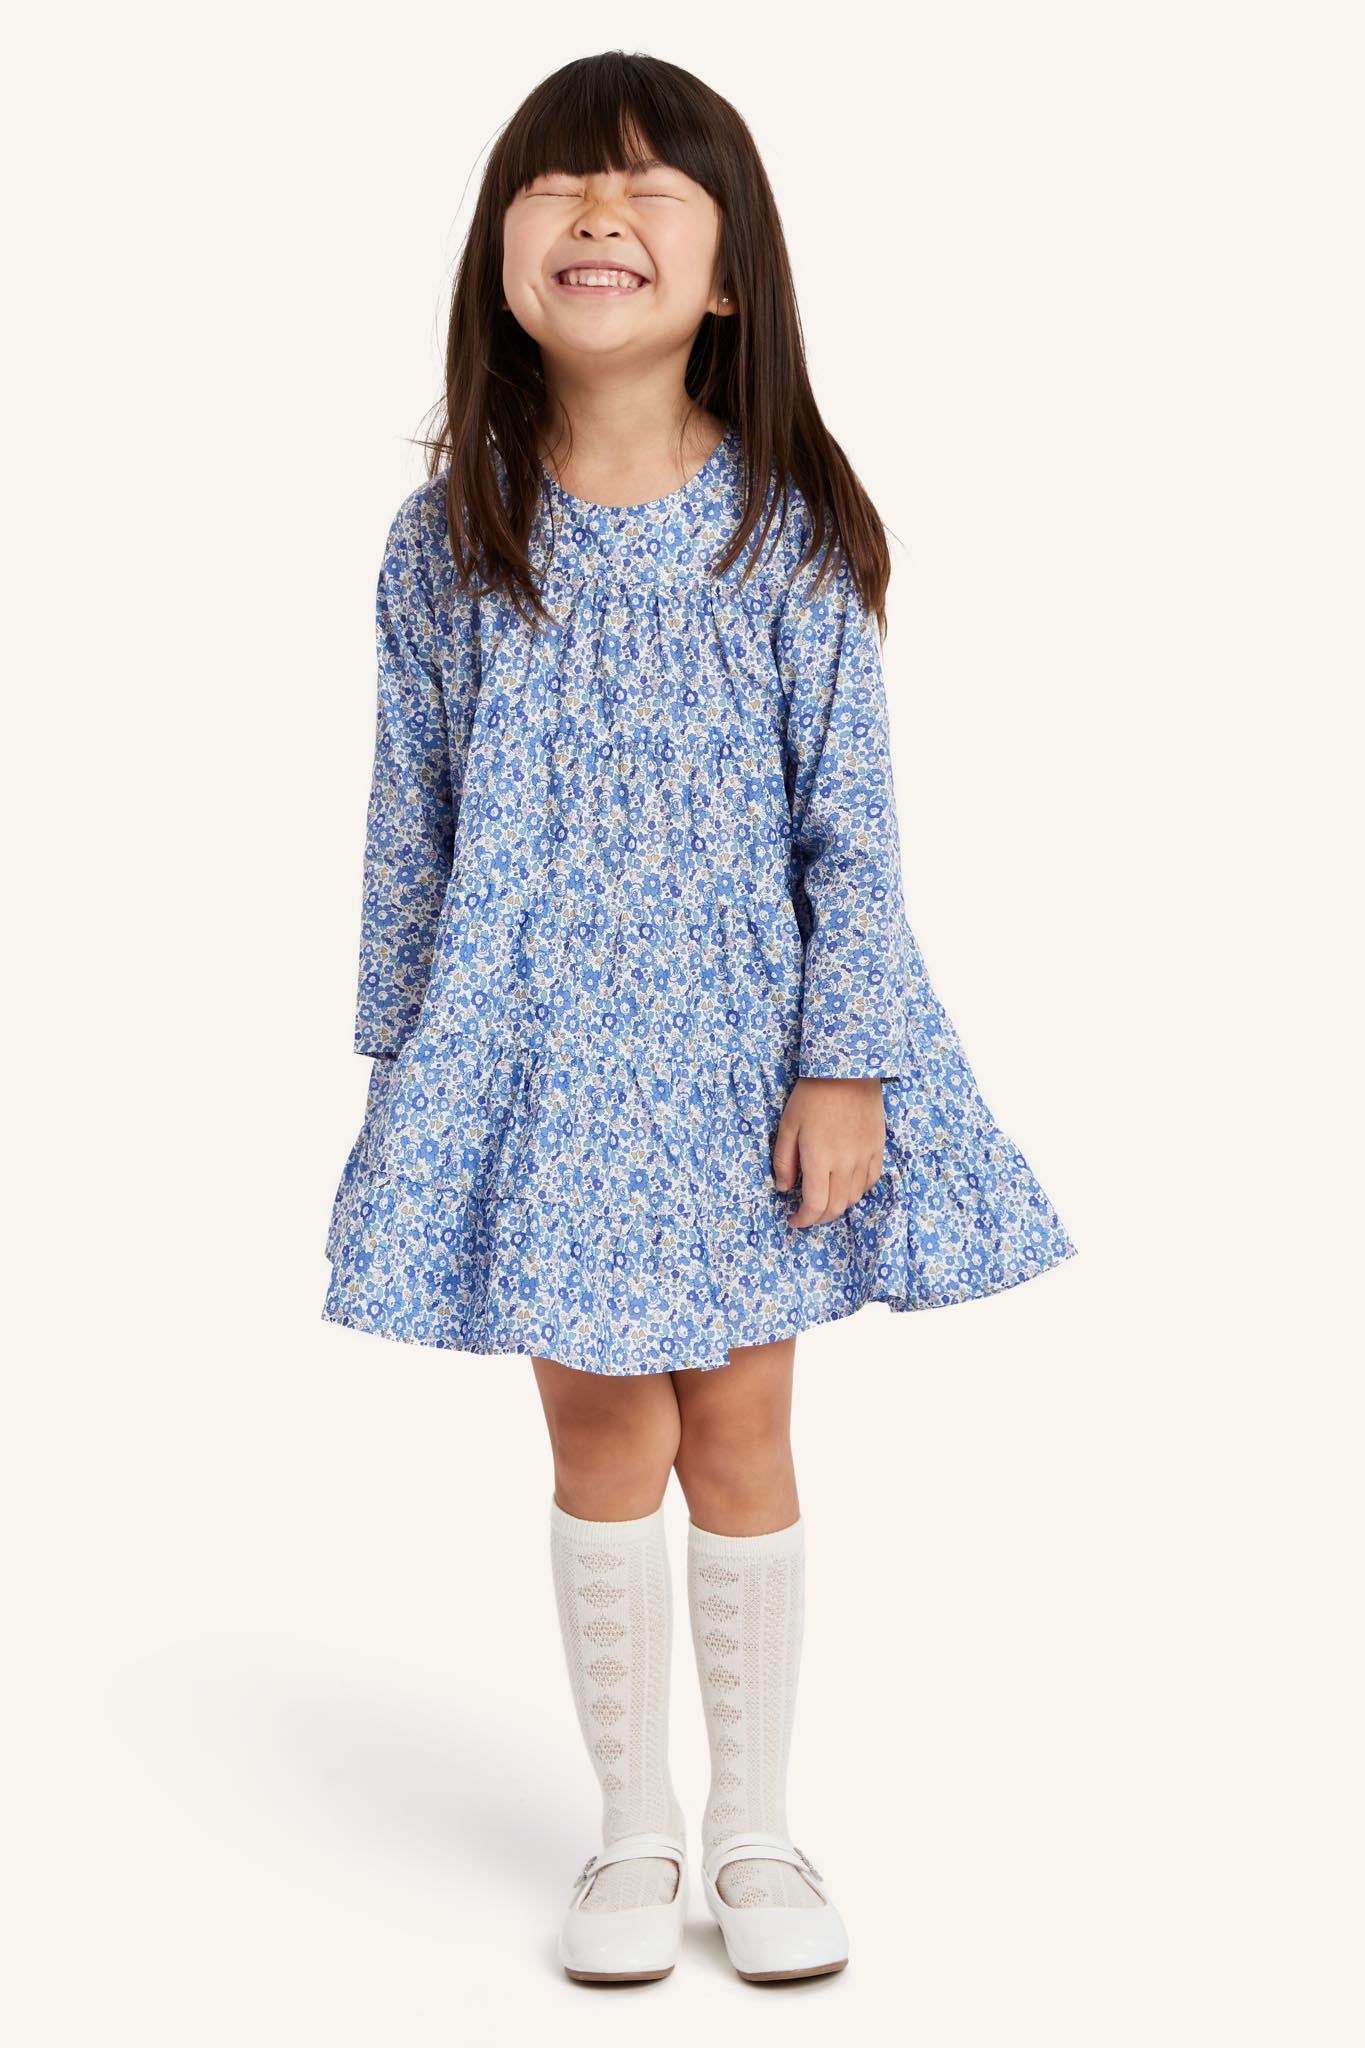 Soliman Children's Dress in Liberty Blue Print